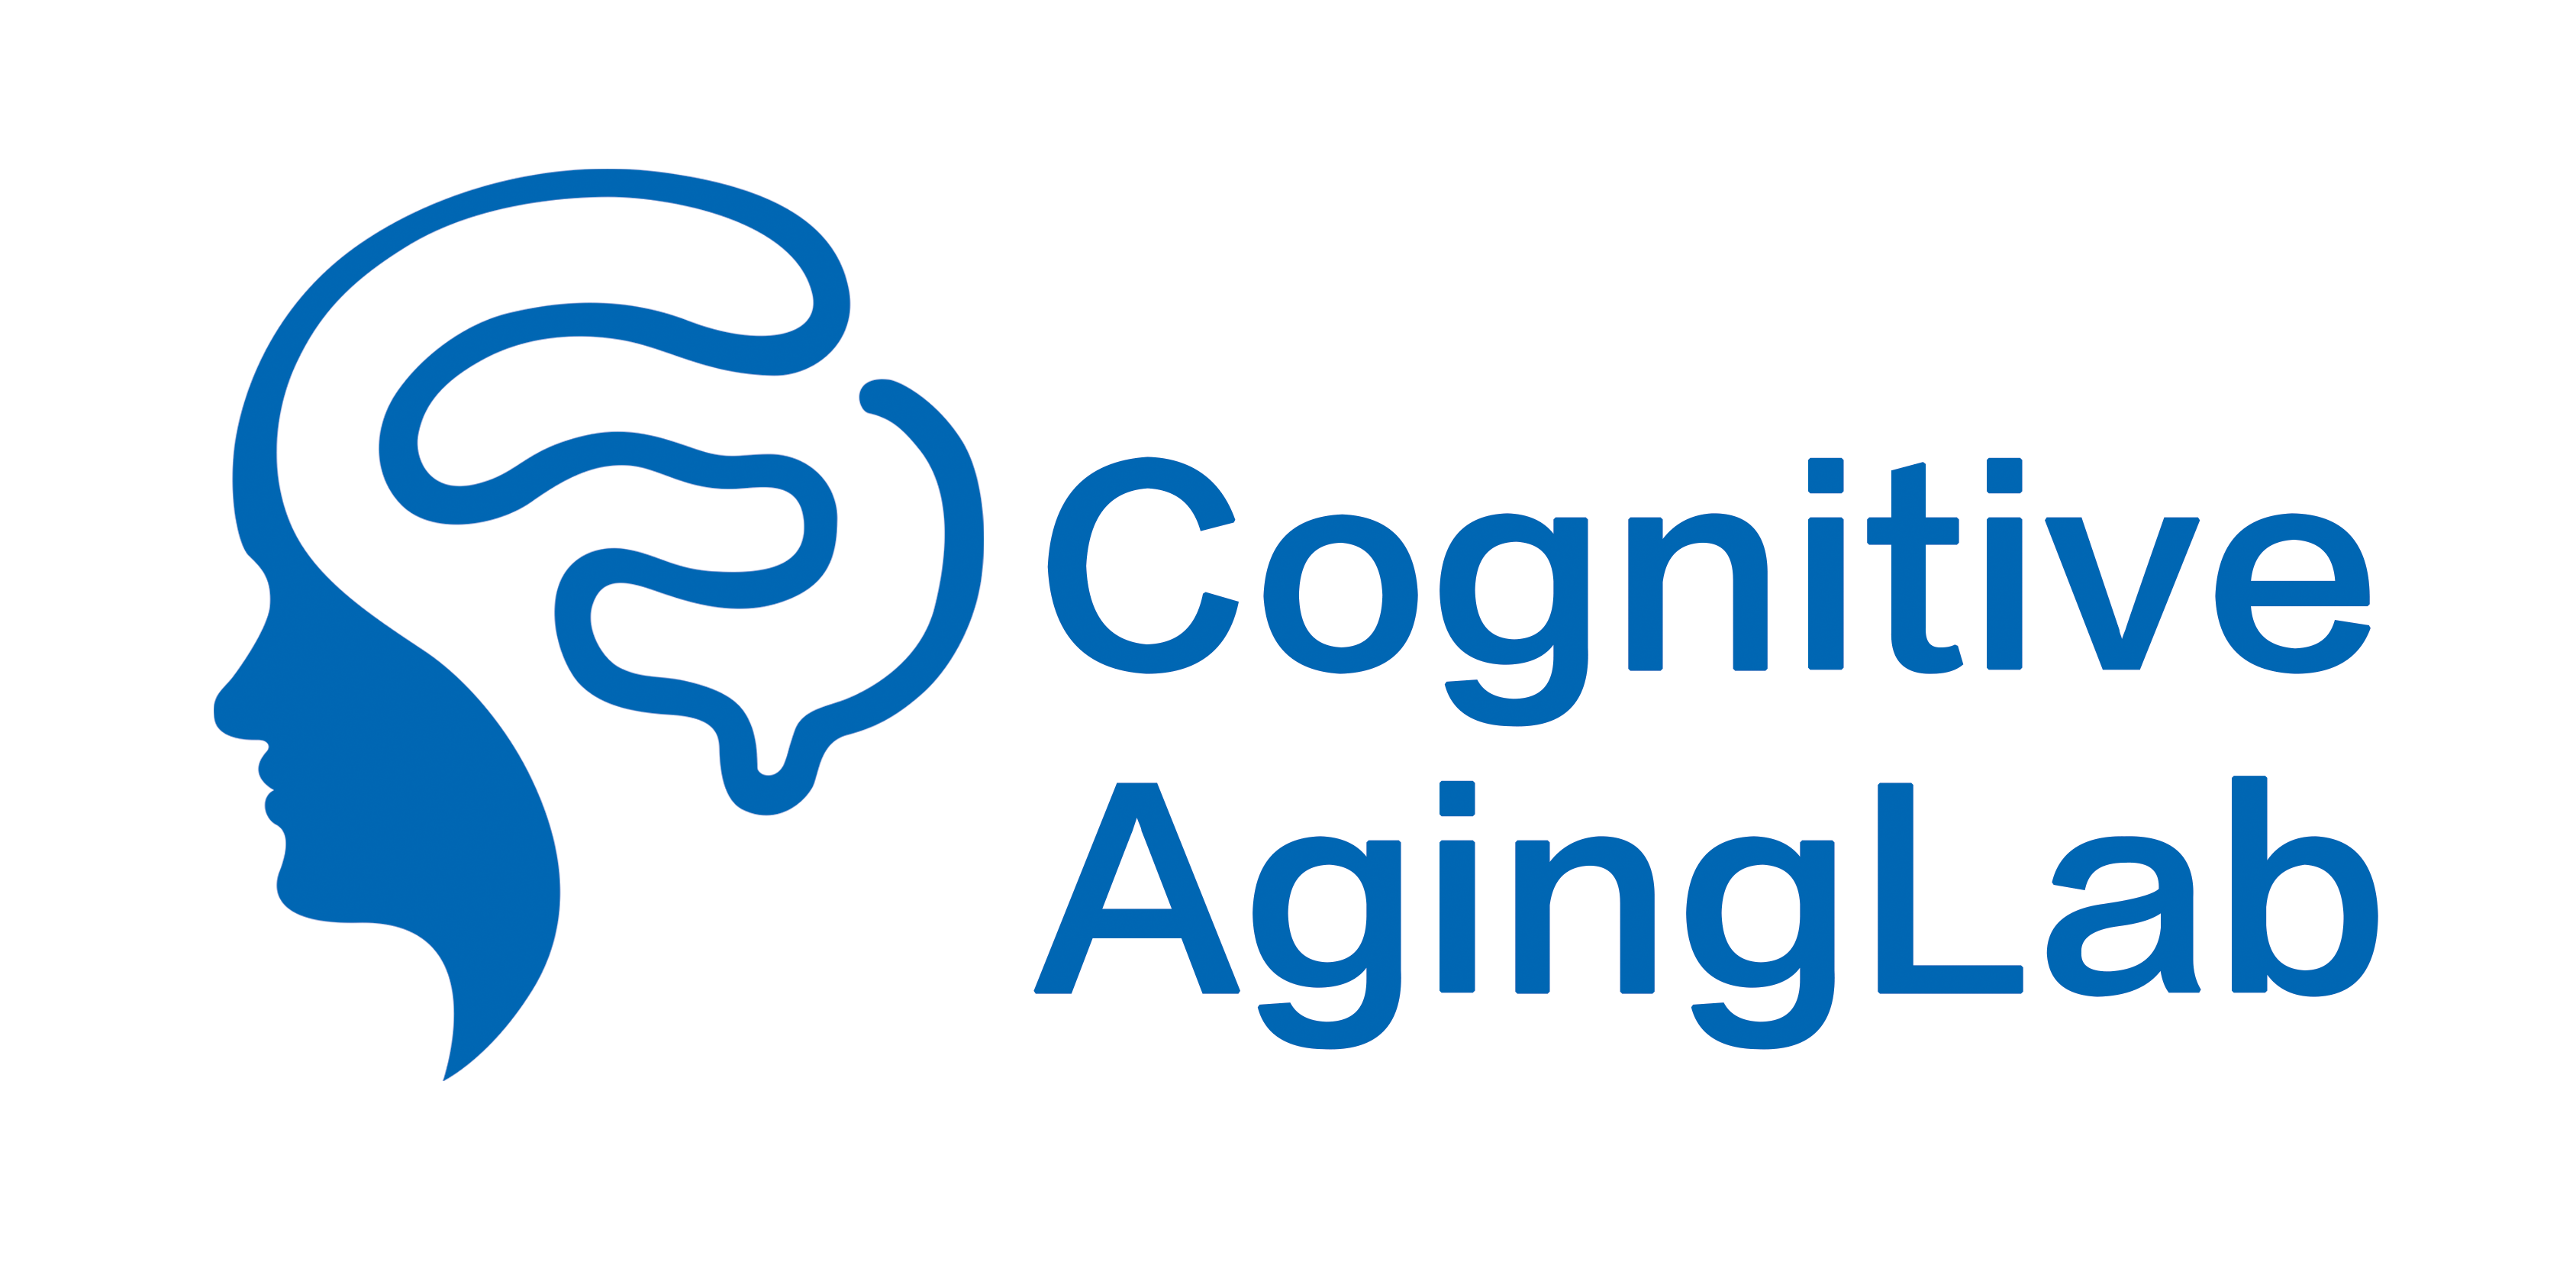 Cognitive Aging Lab logo